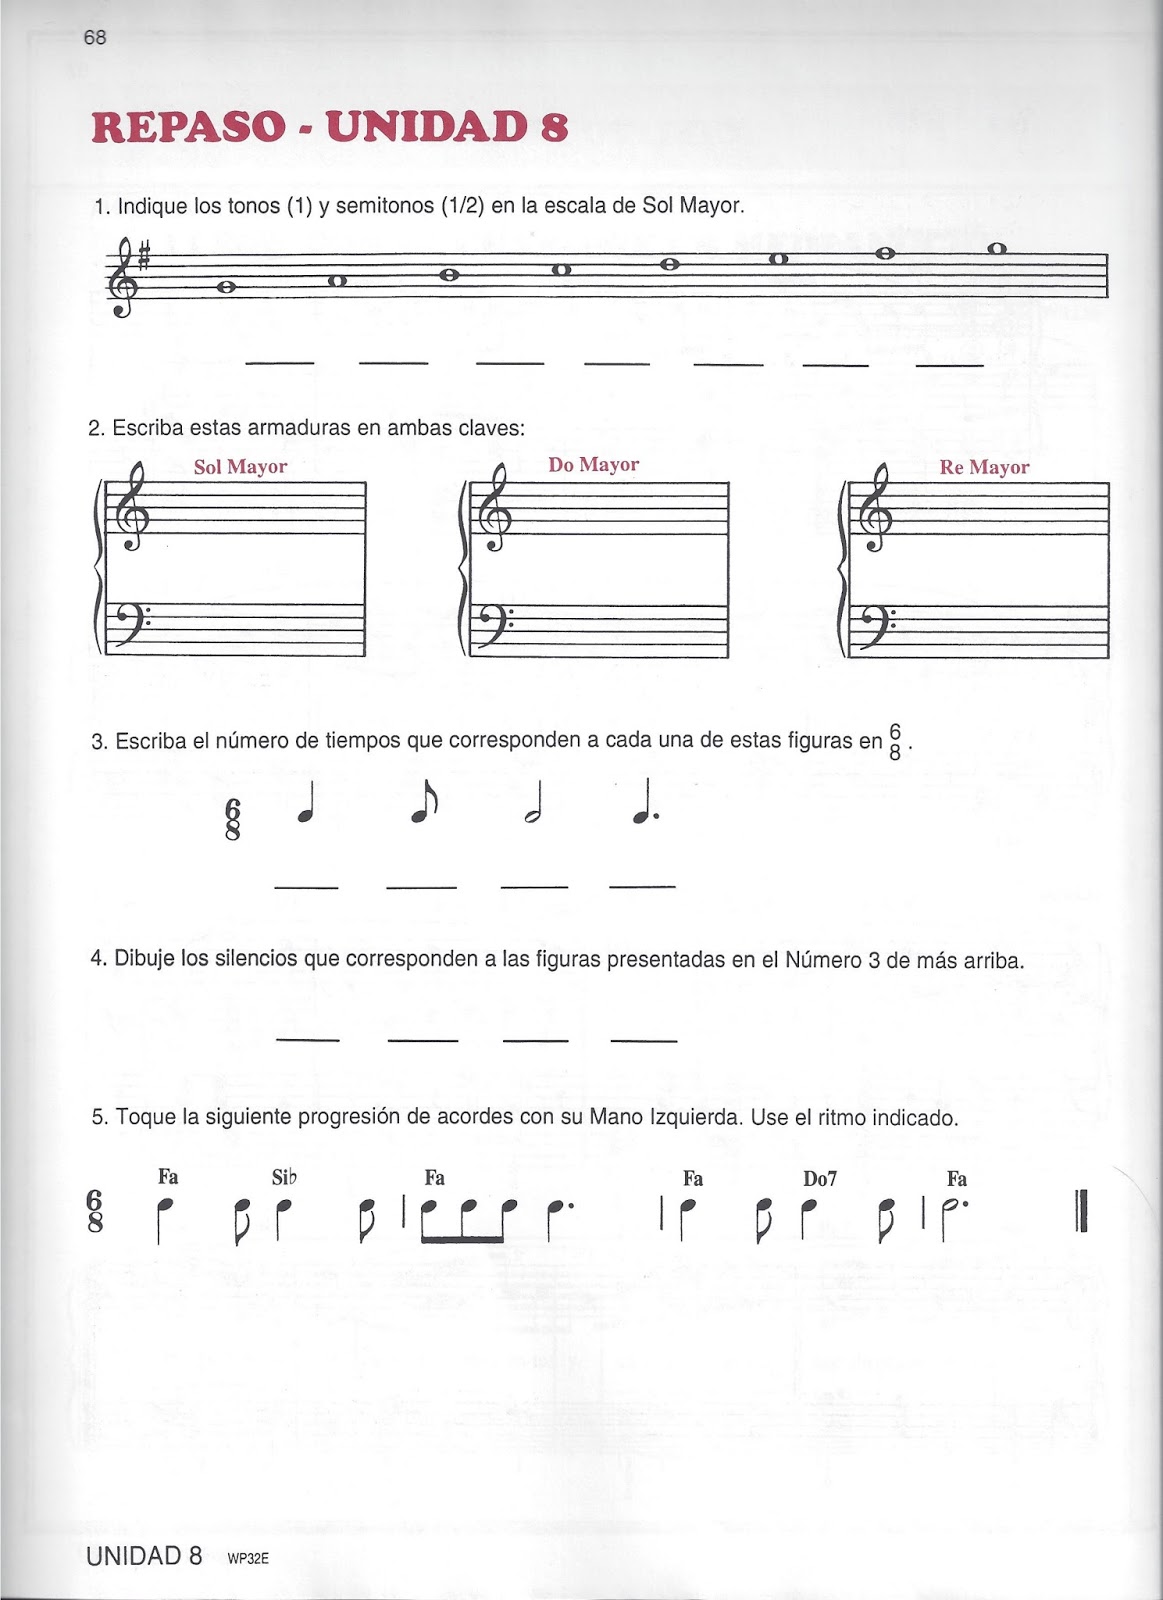 bastien piano basics primer pdf